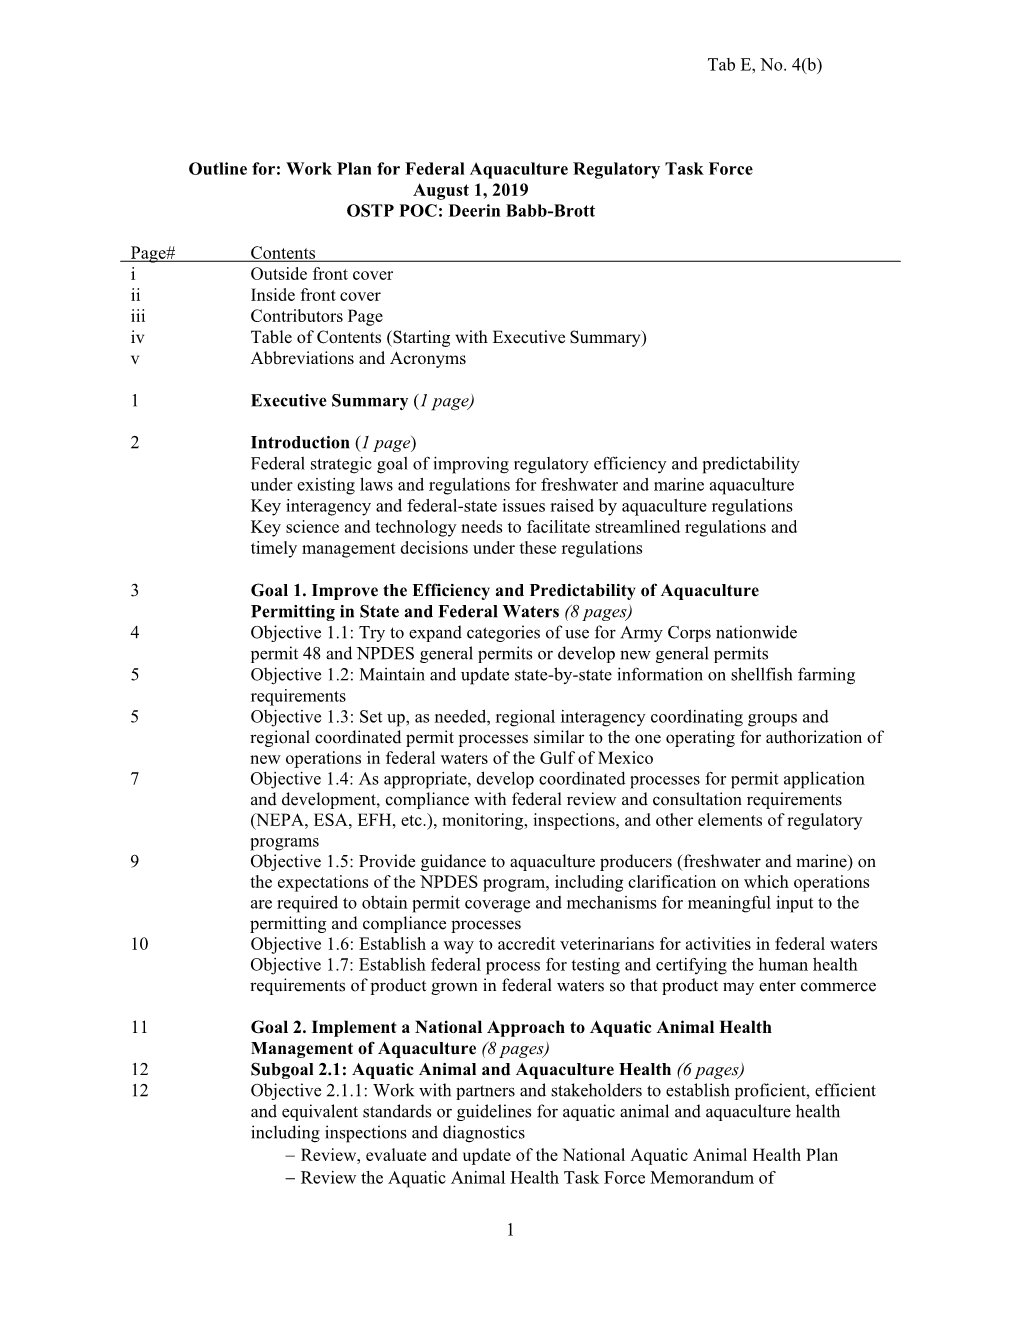 1 Outline For: Work Plan for Federal Aquaculture Regulatory Task Force